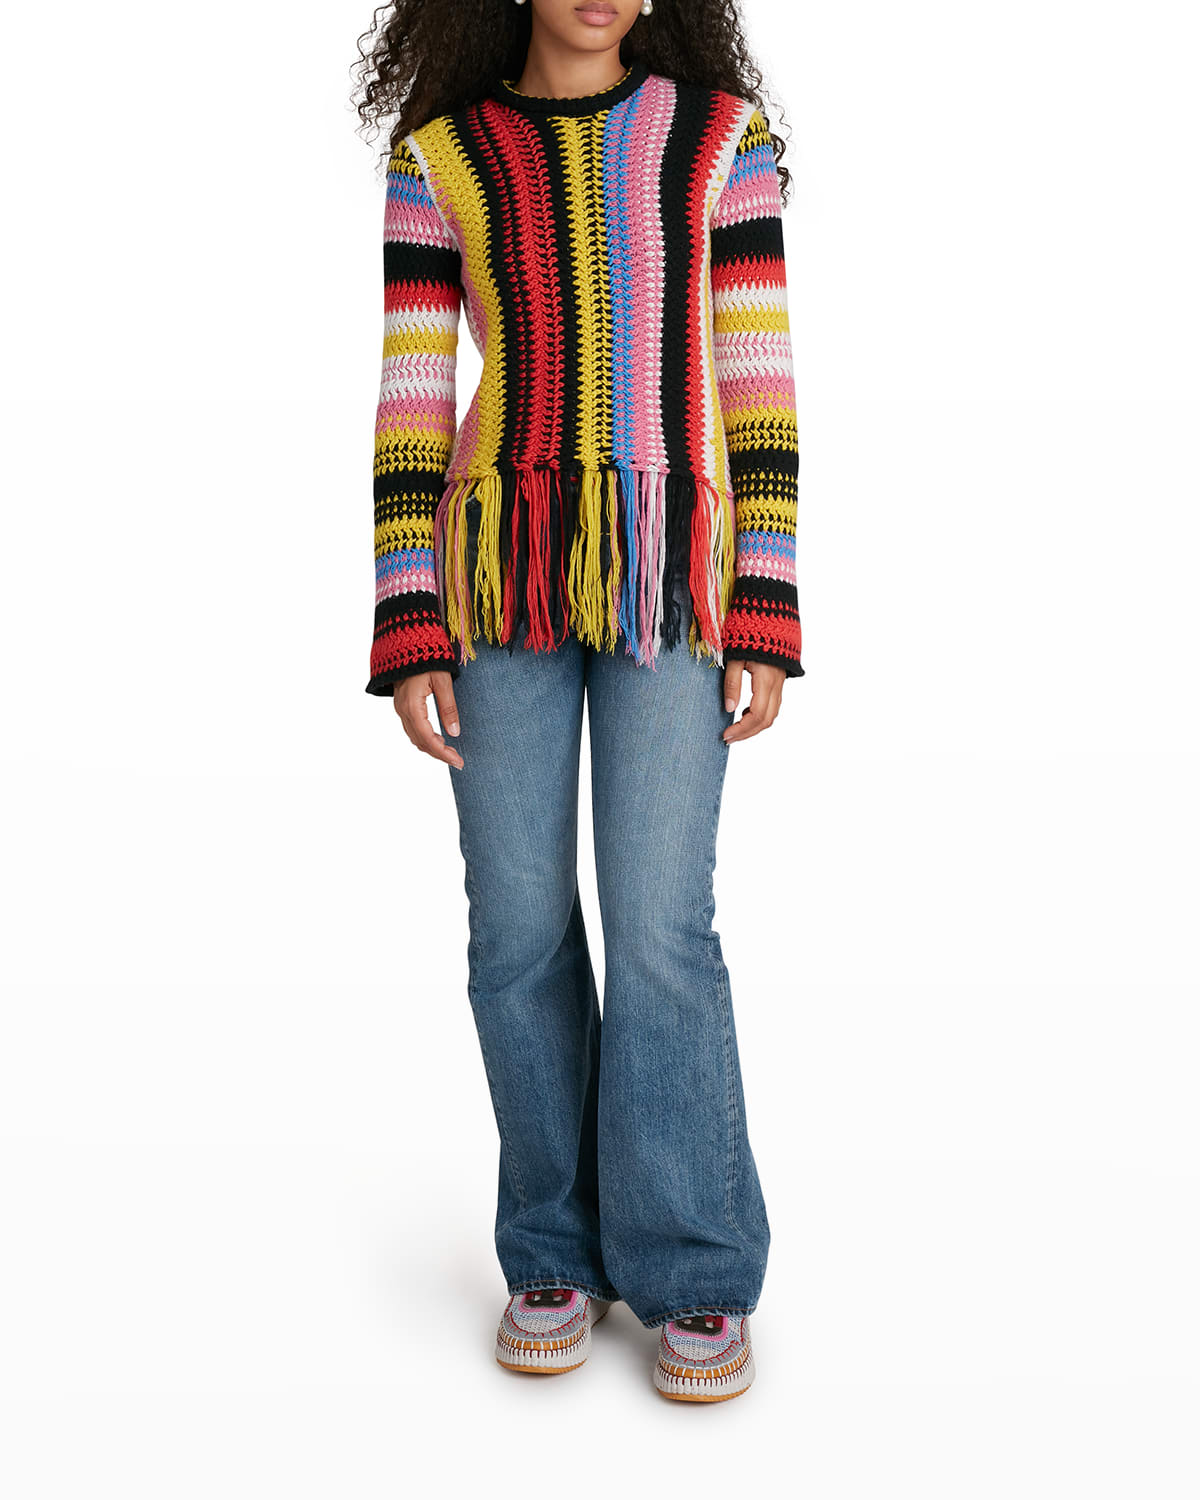 Chloe Cropped Cashmere-Wool Fringe Sweater